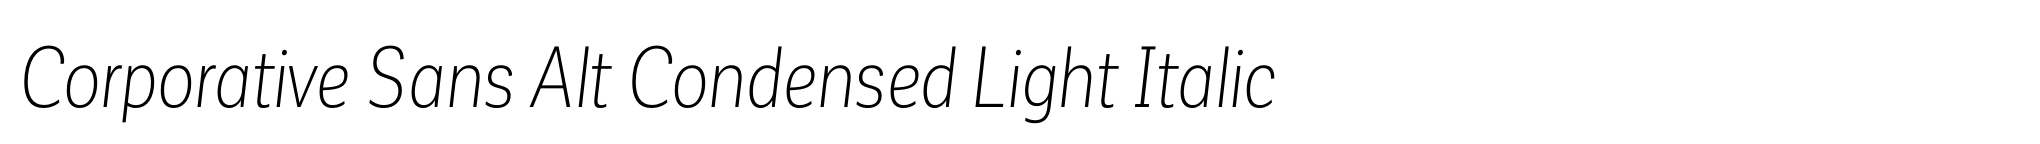 Corporative Sans Alt Condensed Light Italic image